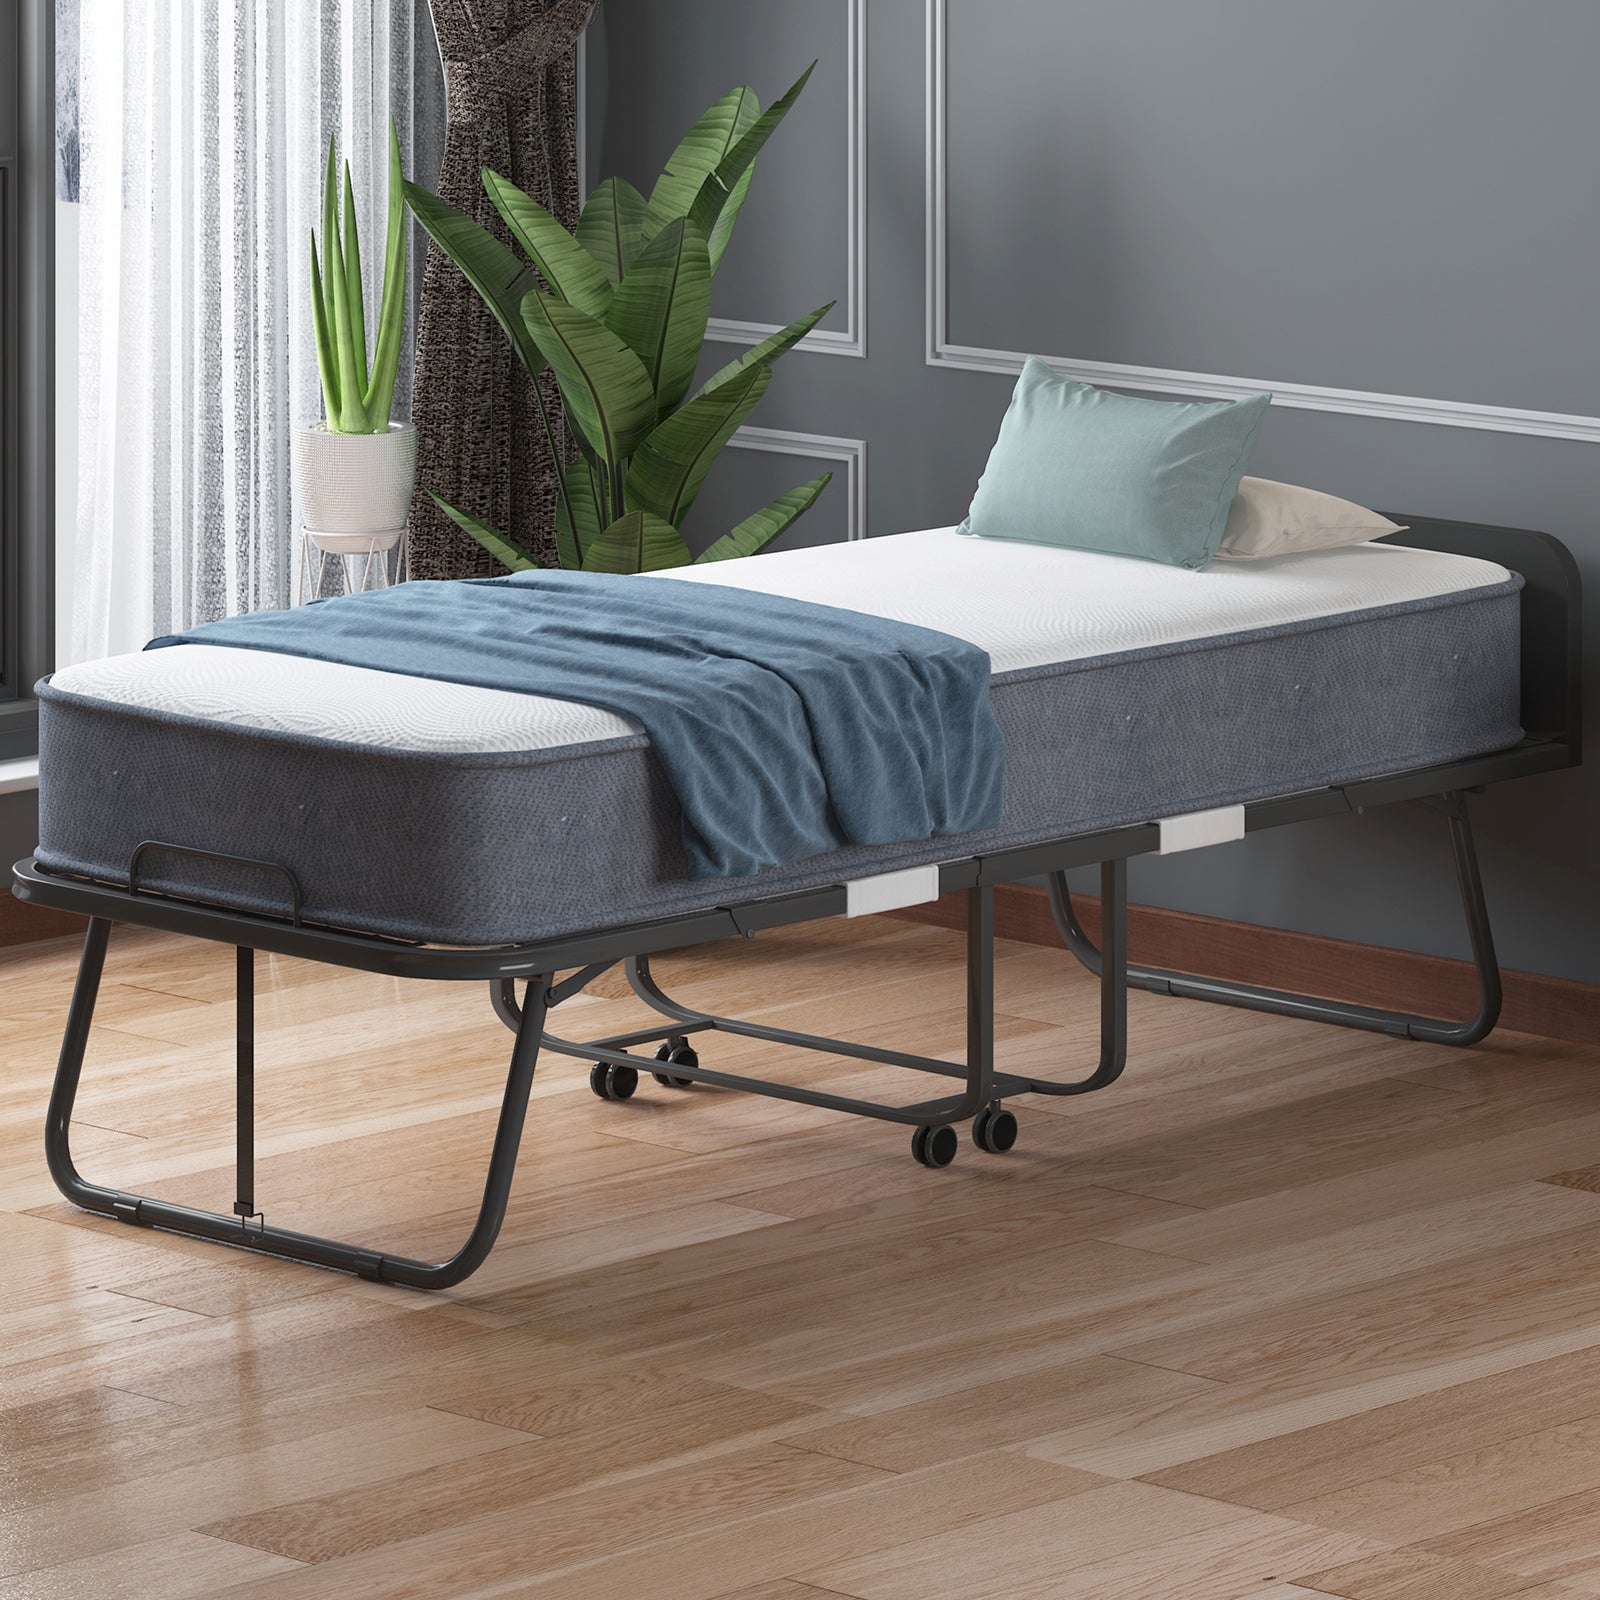 Mjkone Twin Size Folding Bed with Mattress and Headboard